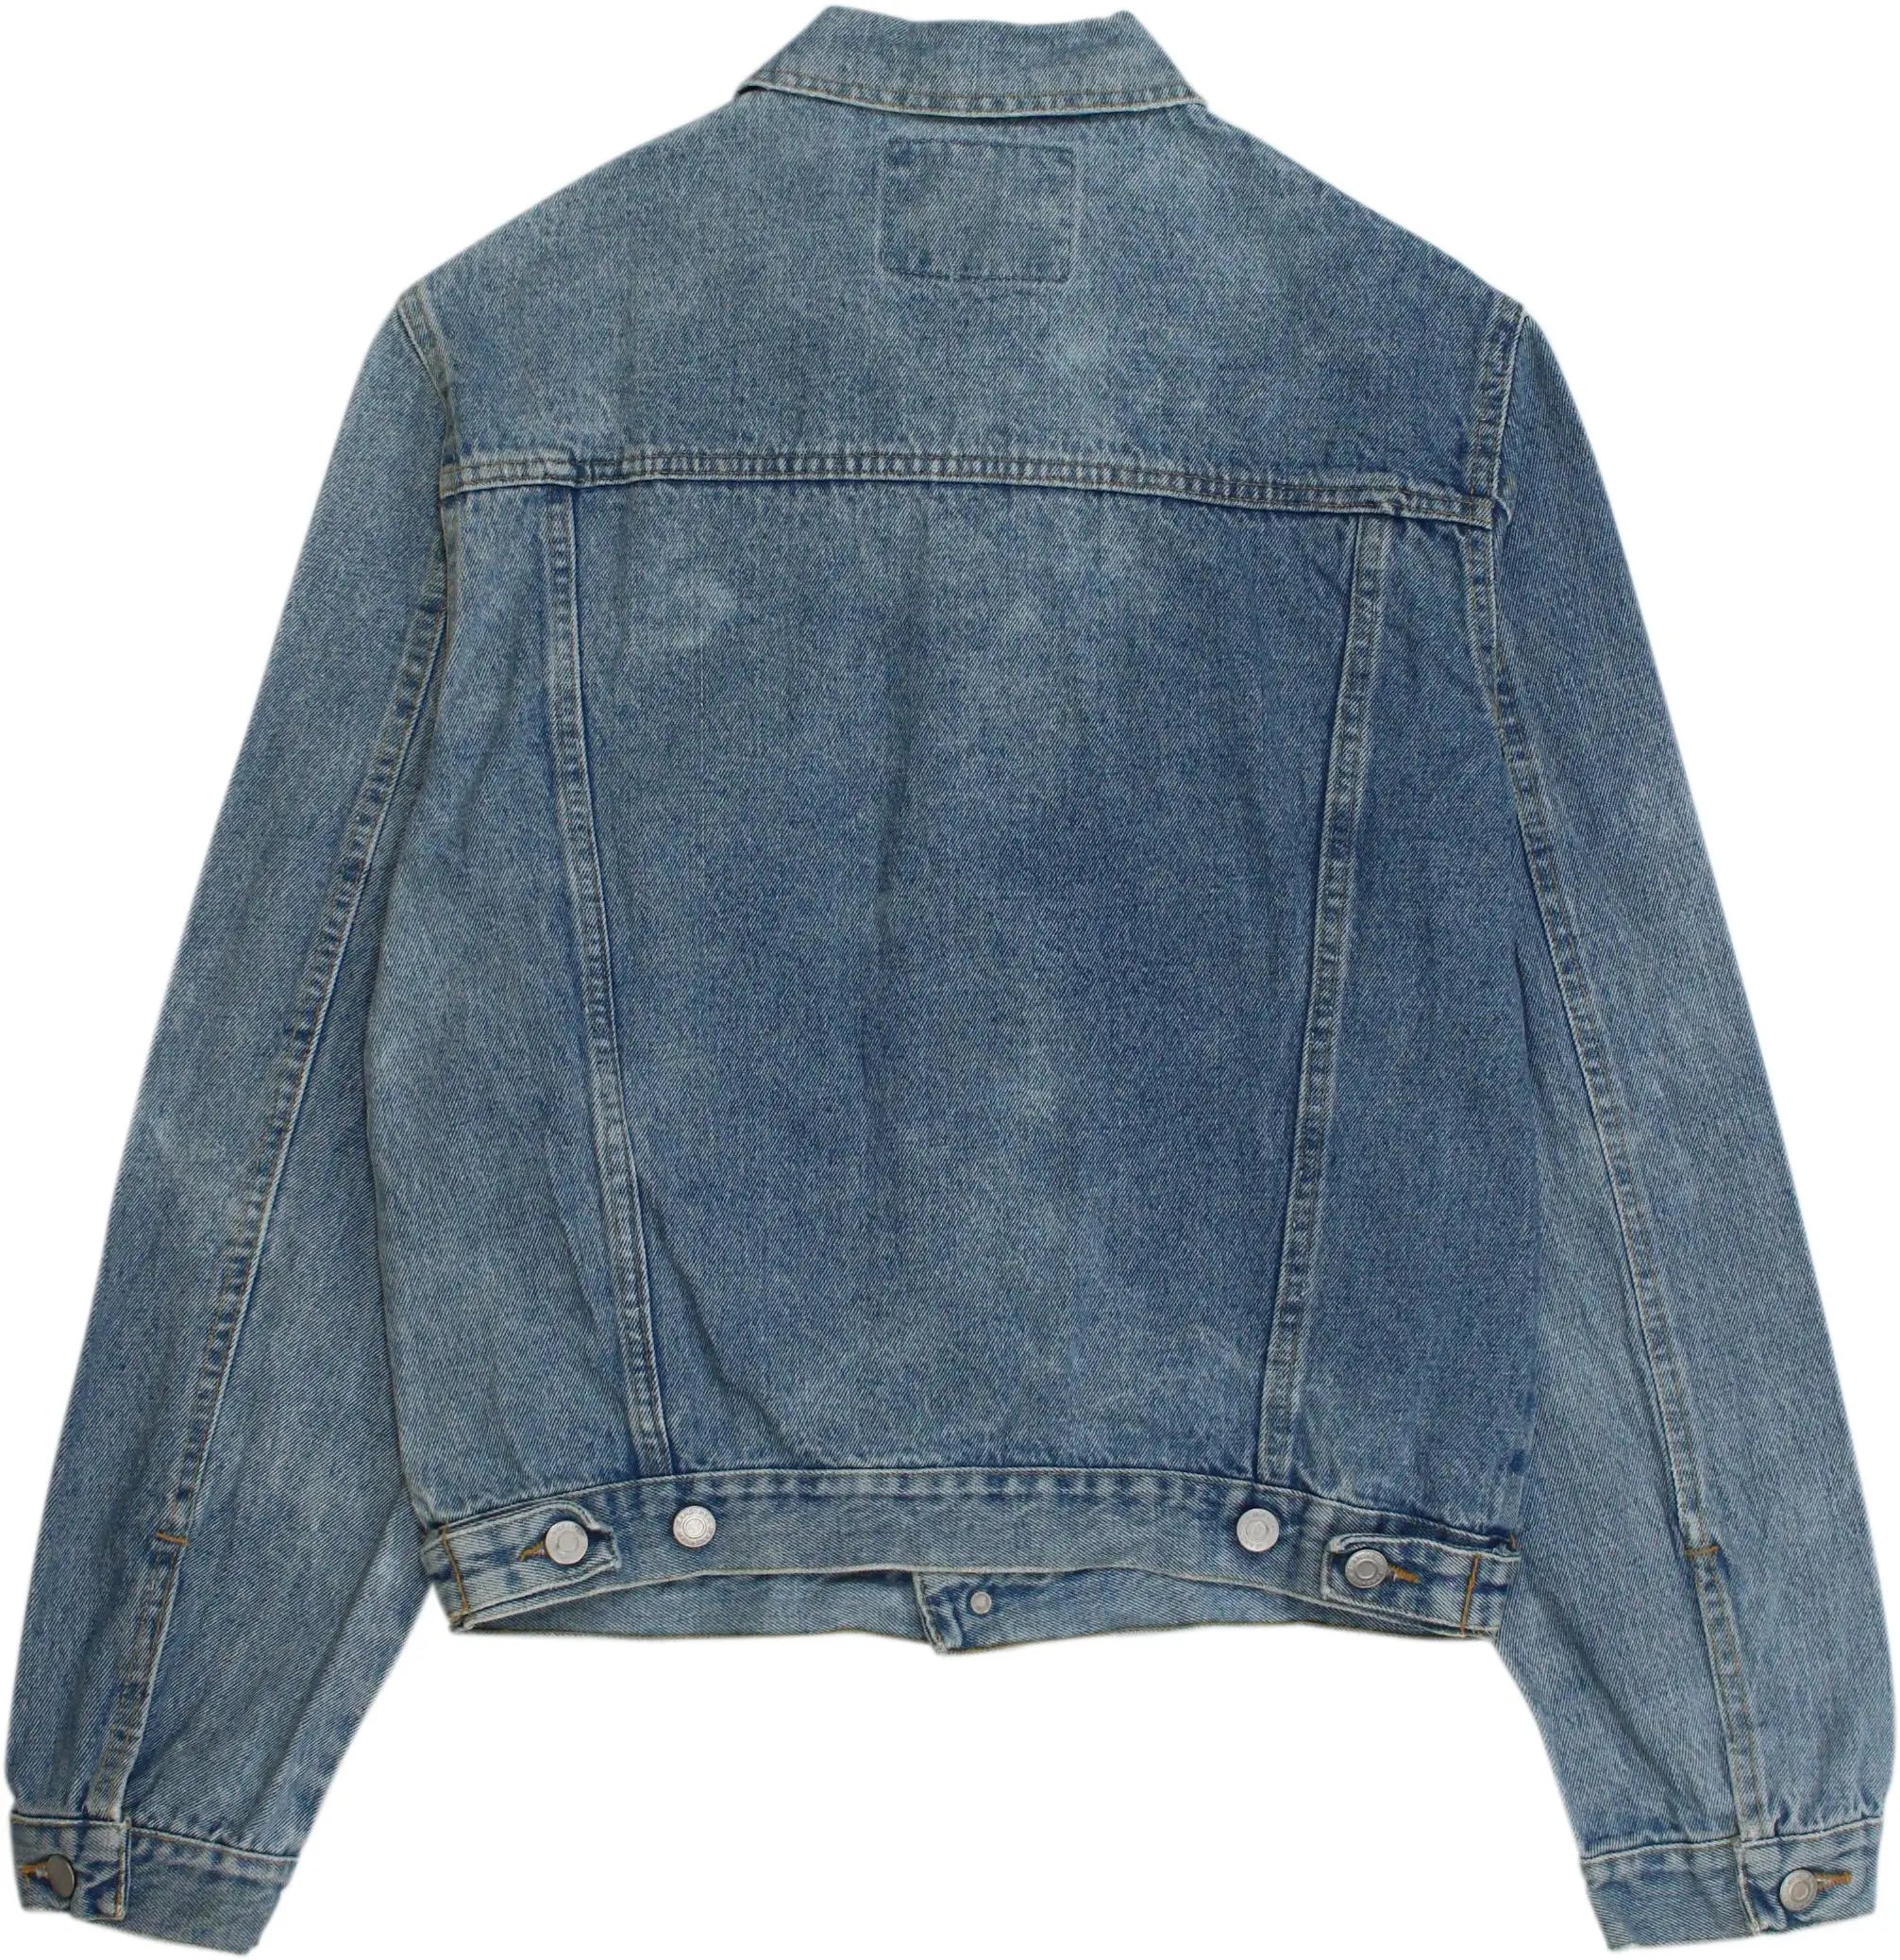 New Jeans - Vintage Denim Jacket- ThriftTale.com - Vintage and second handclothing